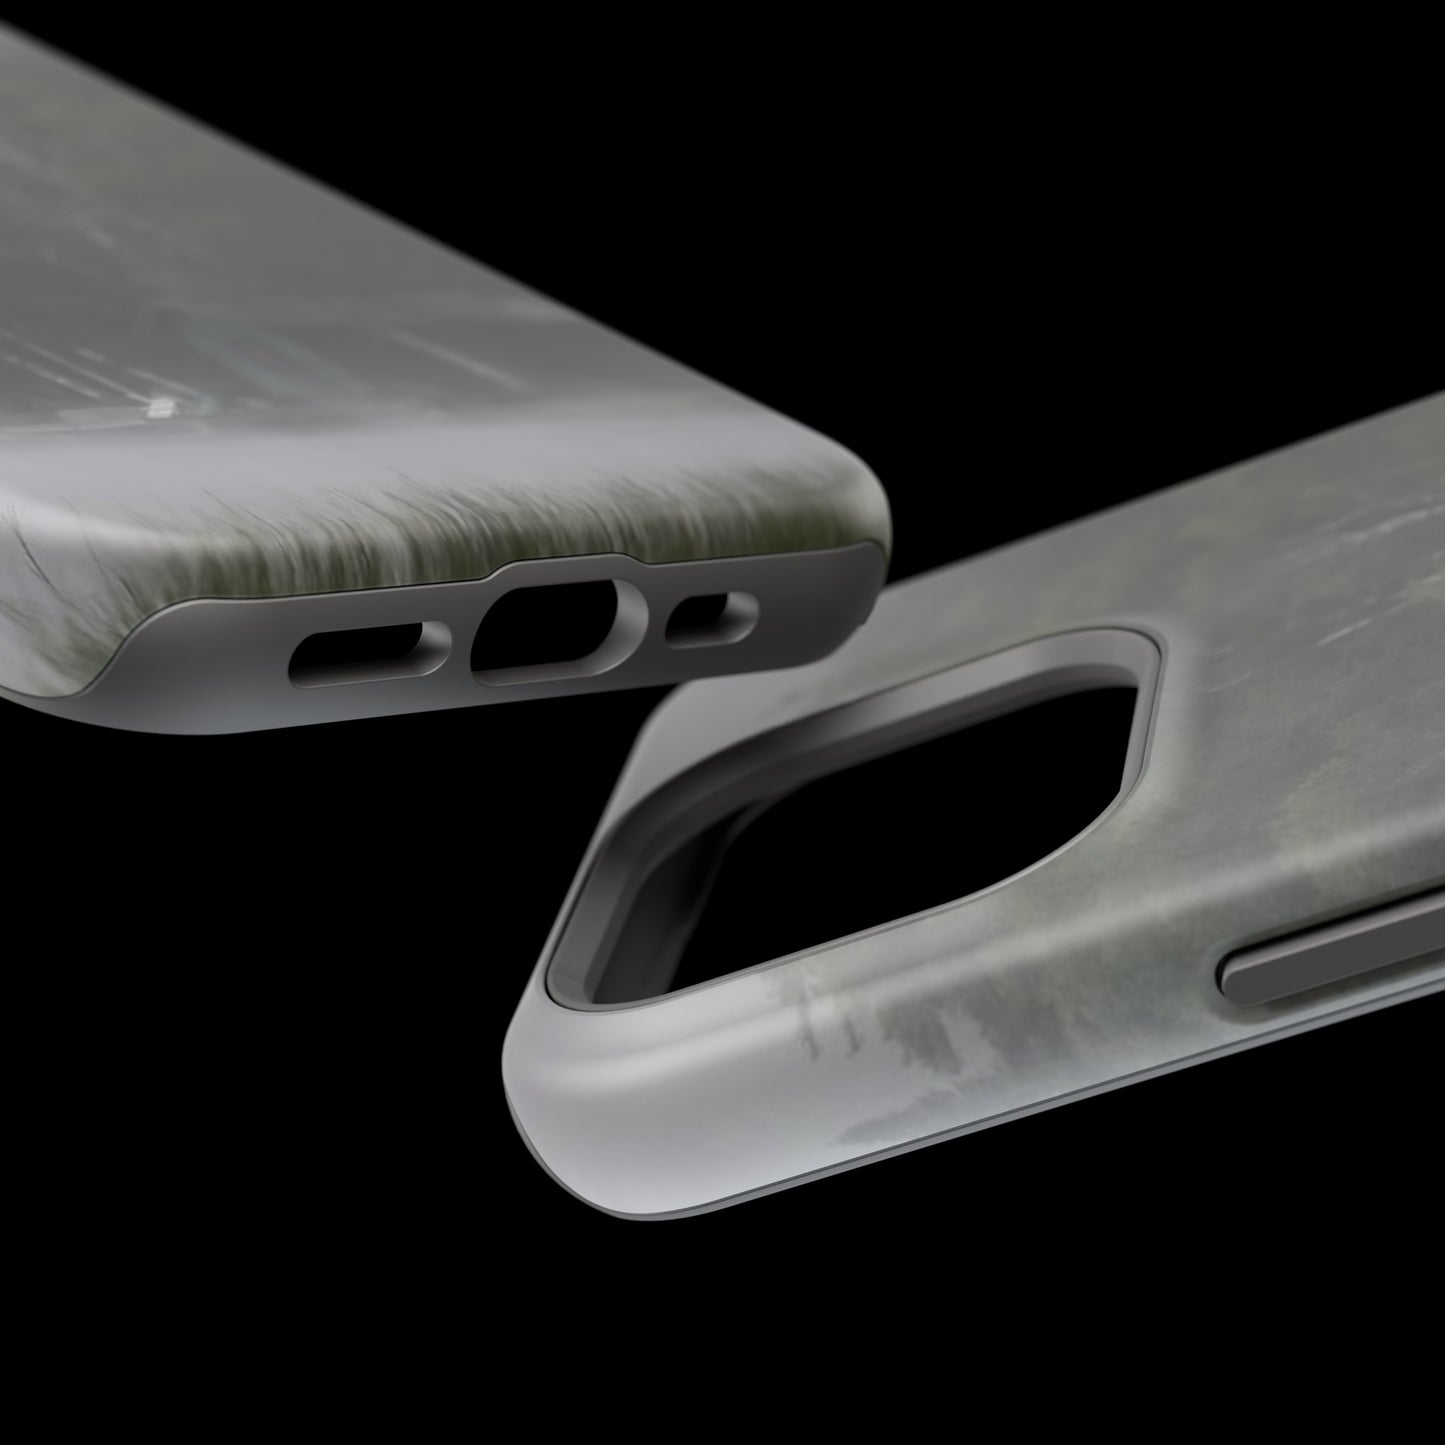 MagSafe Impact Resistant Phone Case - Adirondack Morning